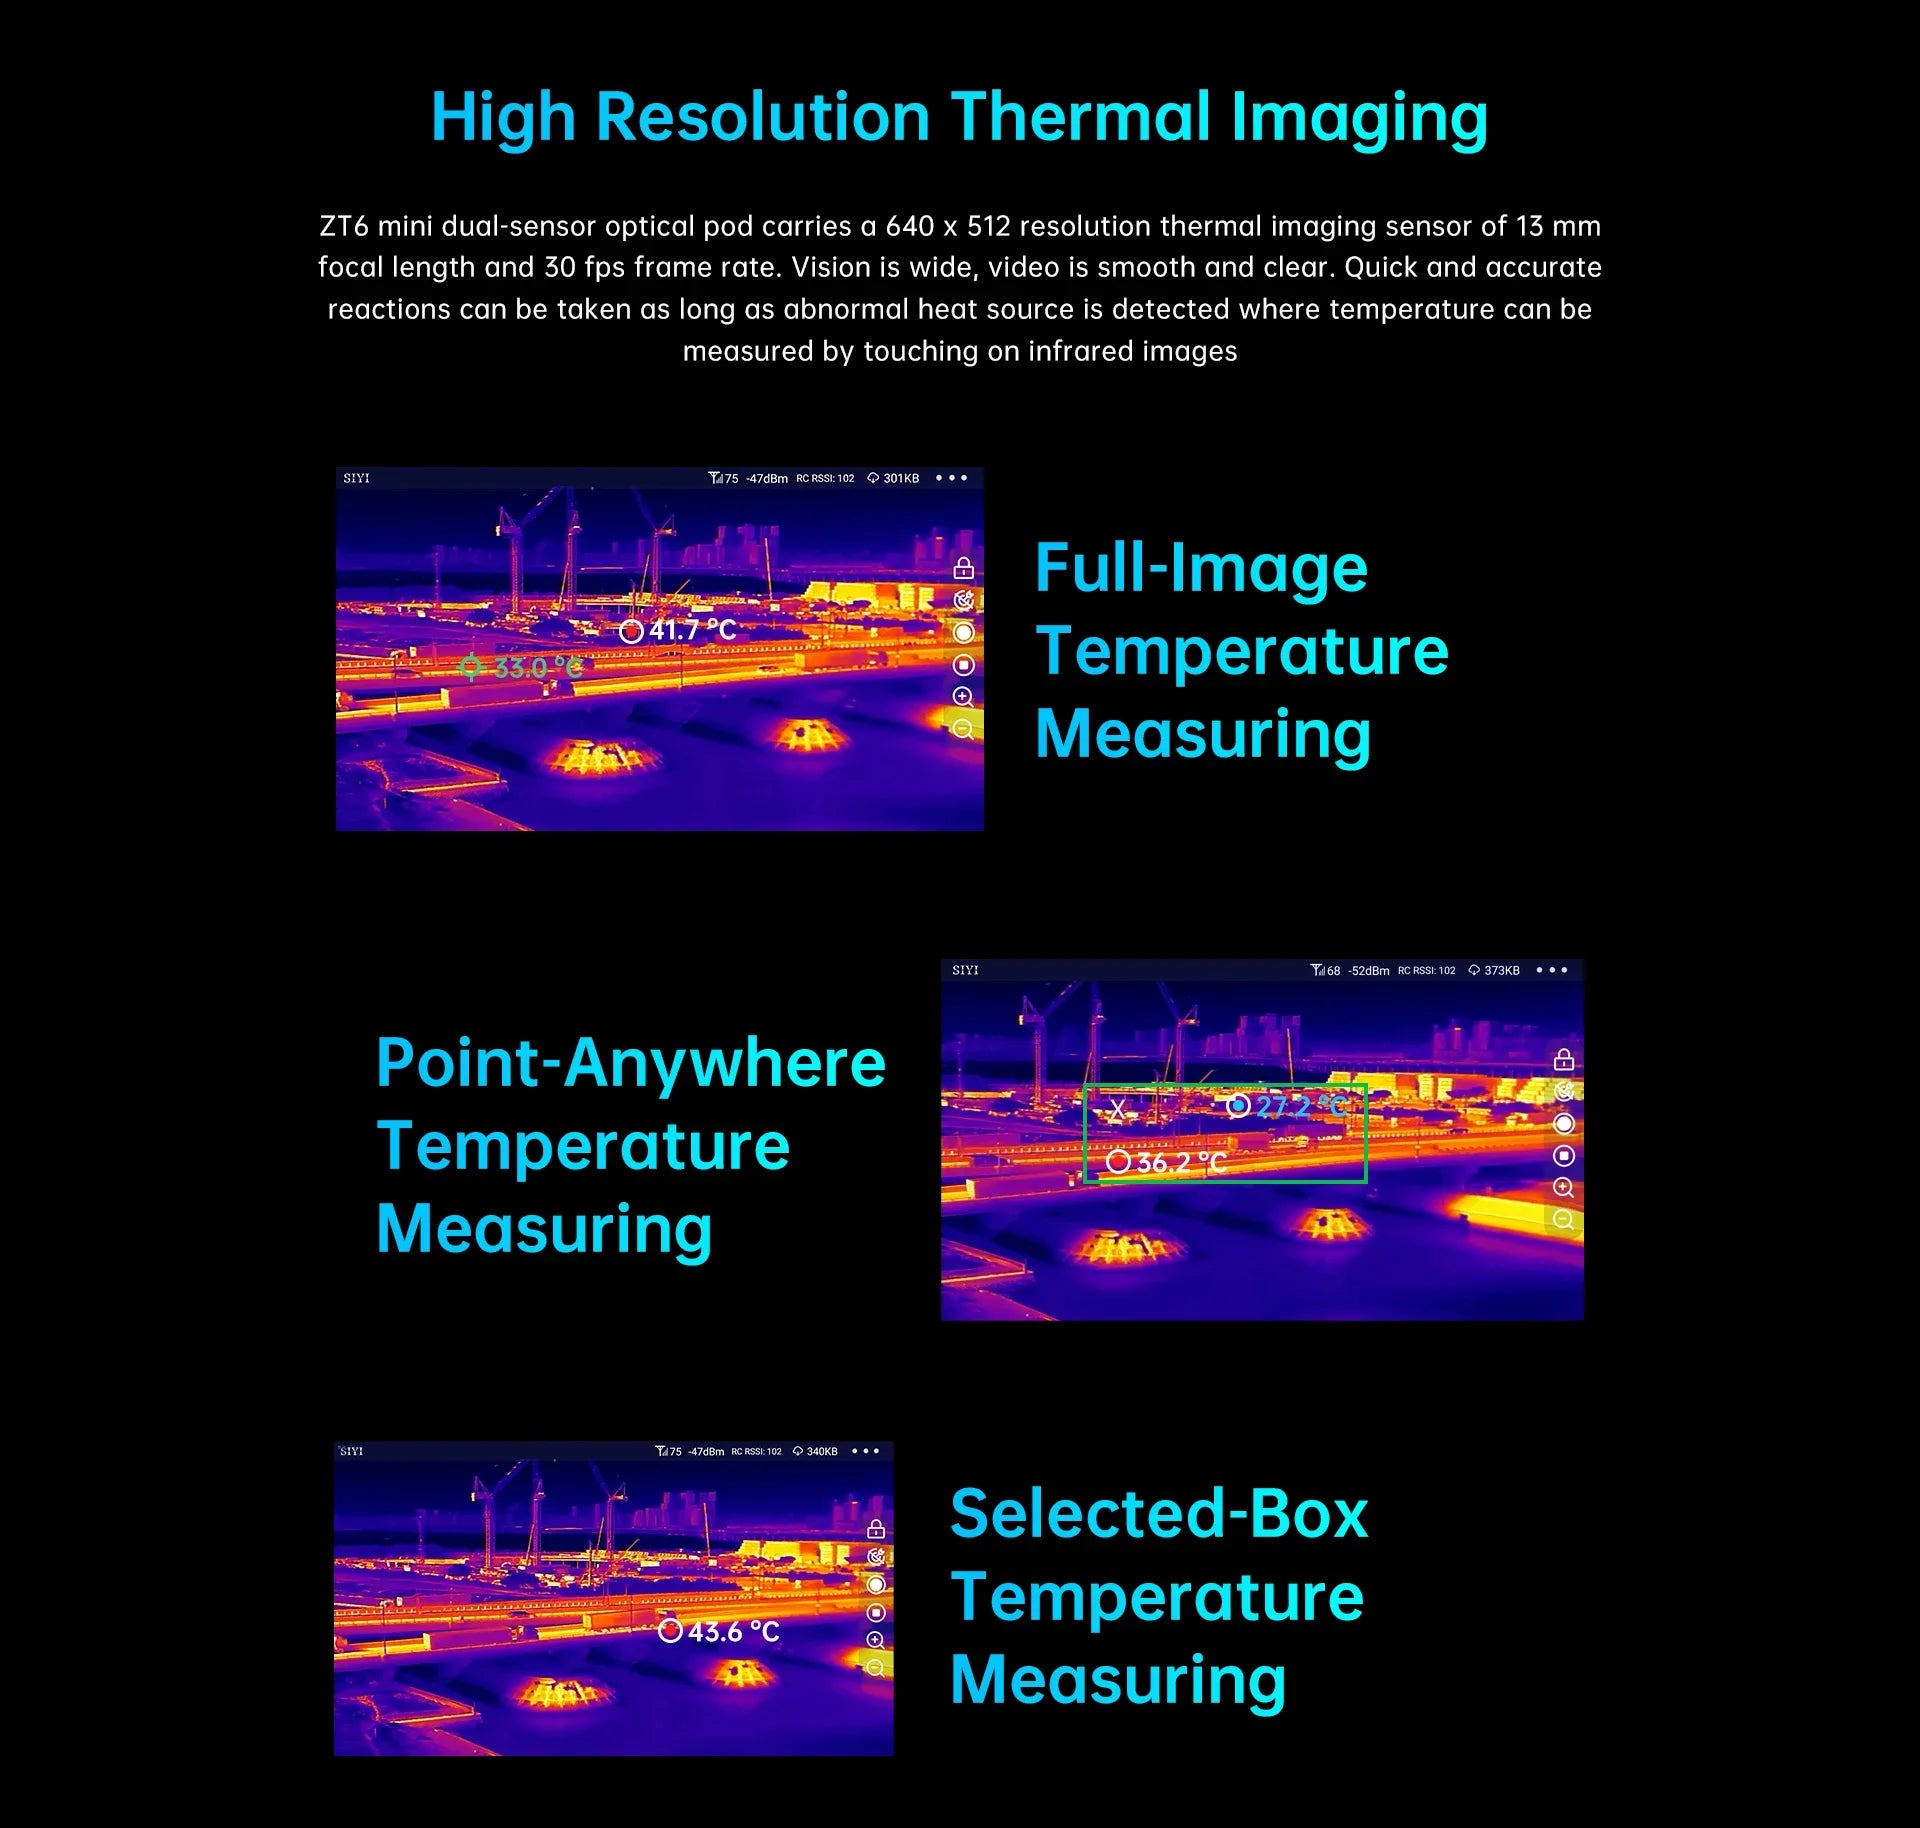 SIYI ZT6 Mini Dual Sensor Optical Pod, High-resolution thermal imaging sensor for detecting abnormal heat sources and measuring temperatures.